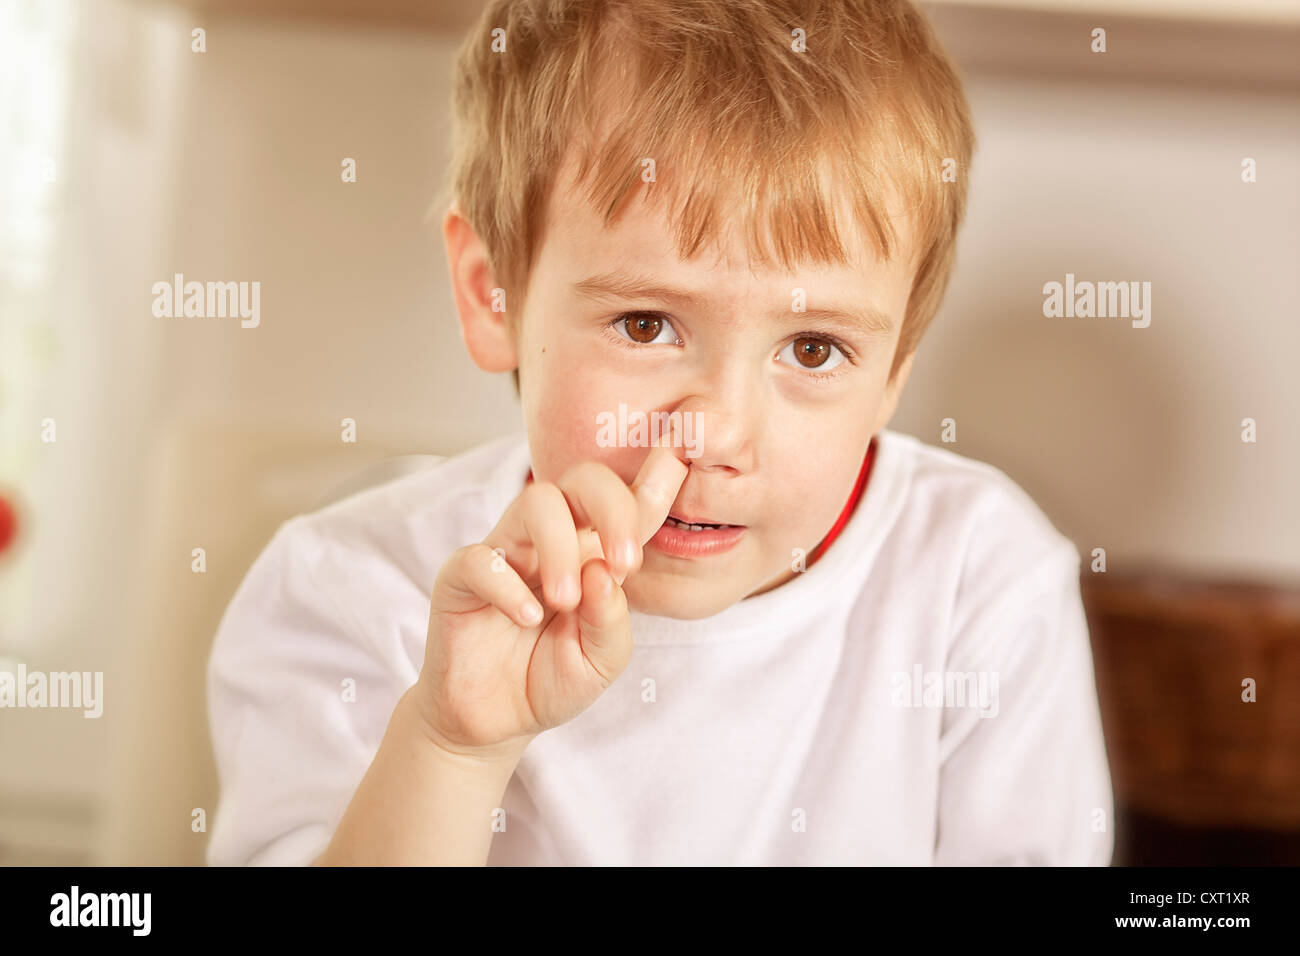 Boy picking his nose Stock Photo